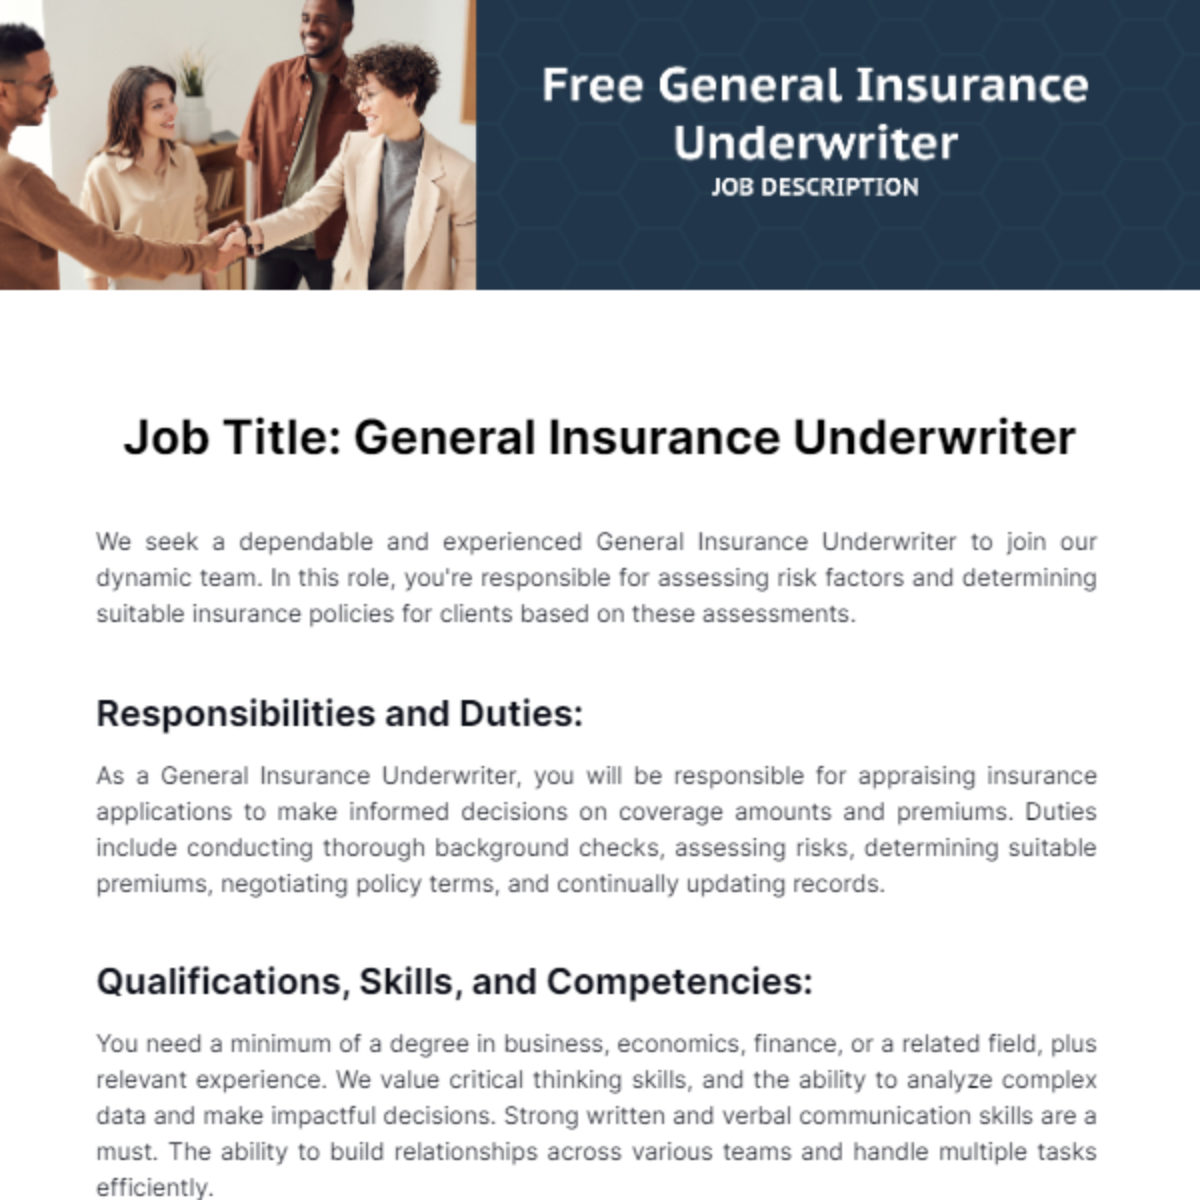 Free General Insurance Underwriter Job Description Template